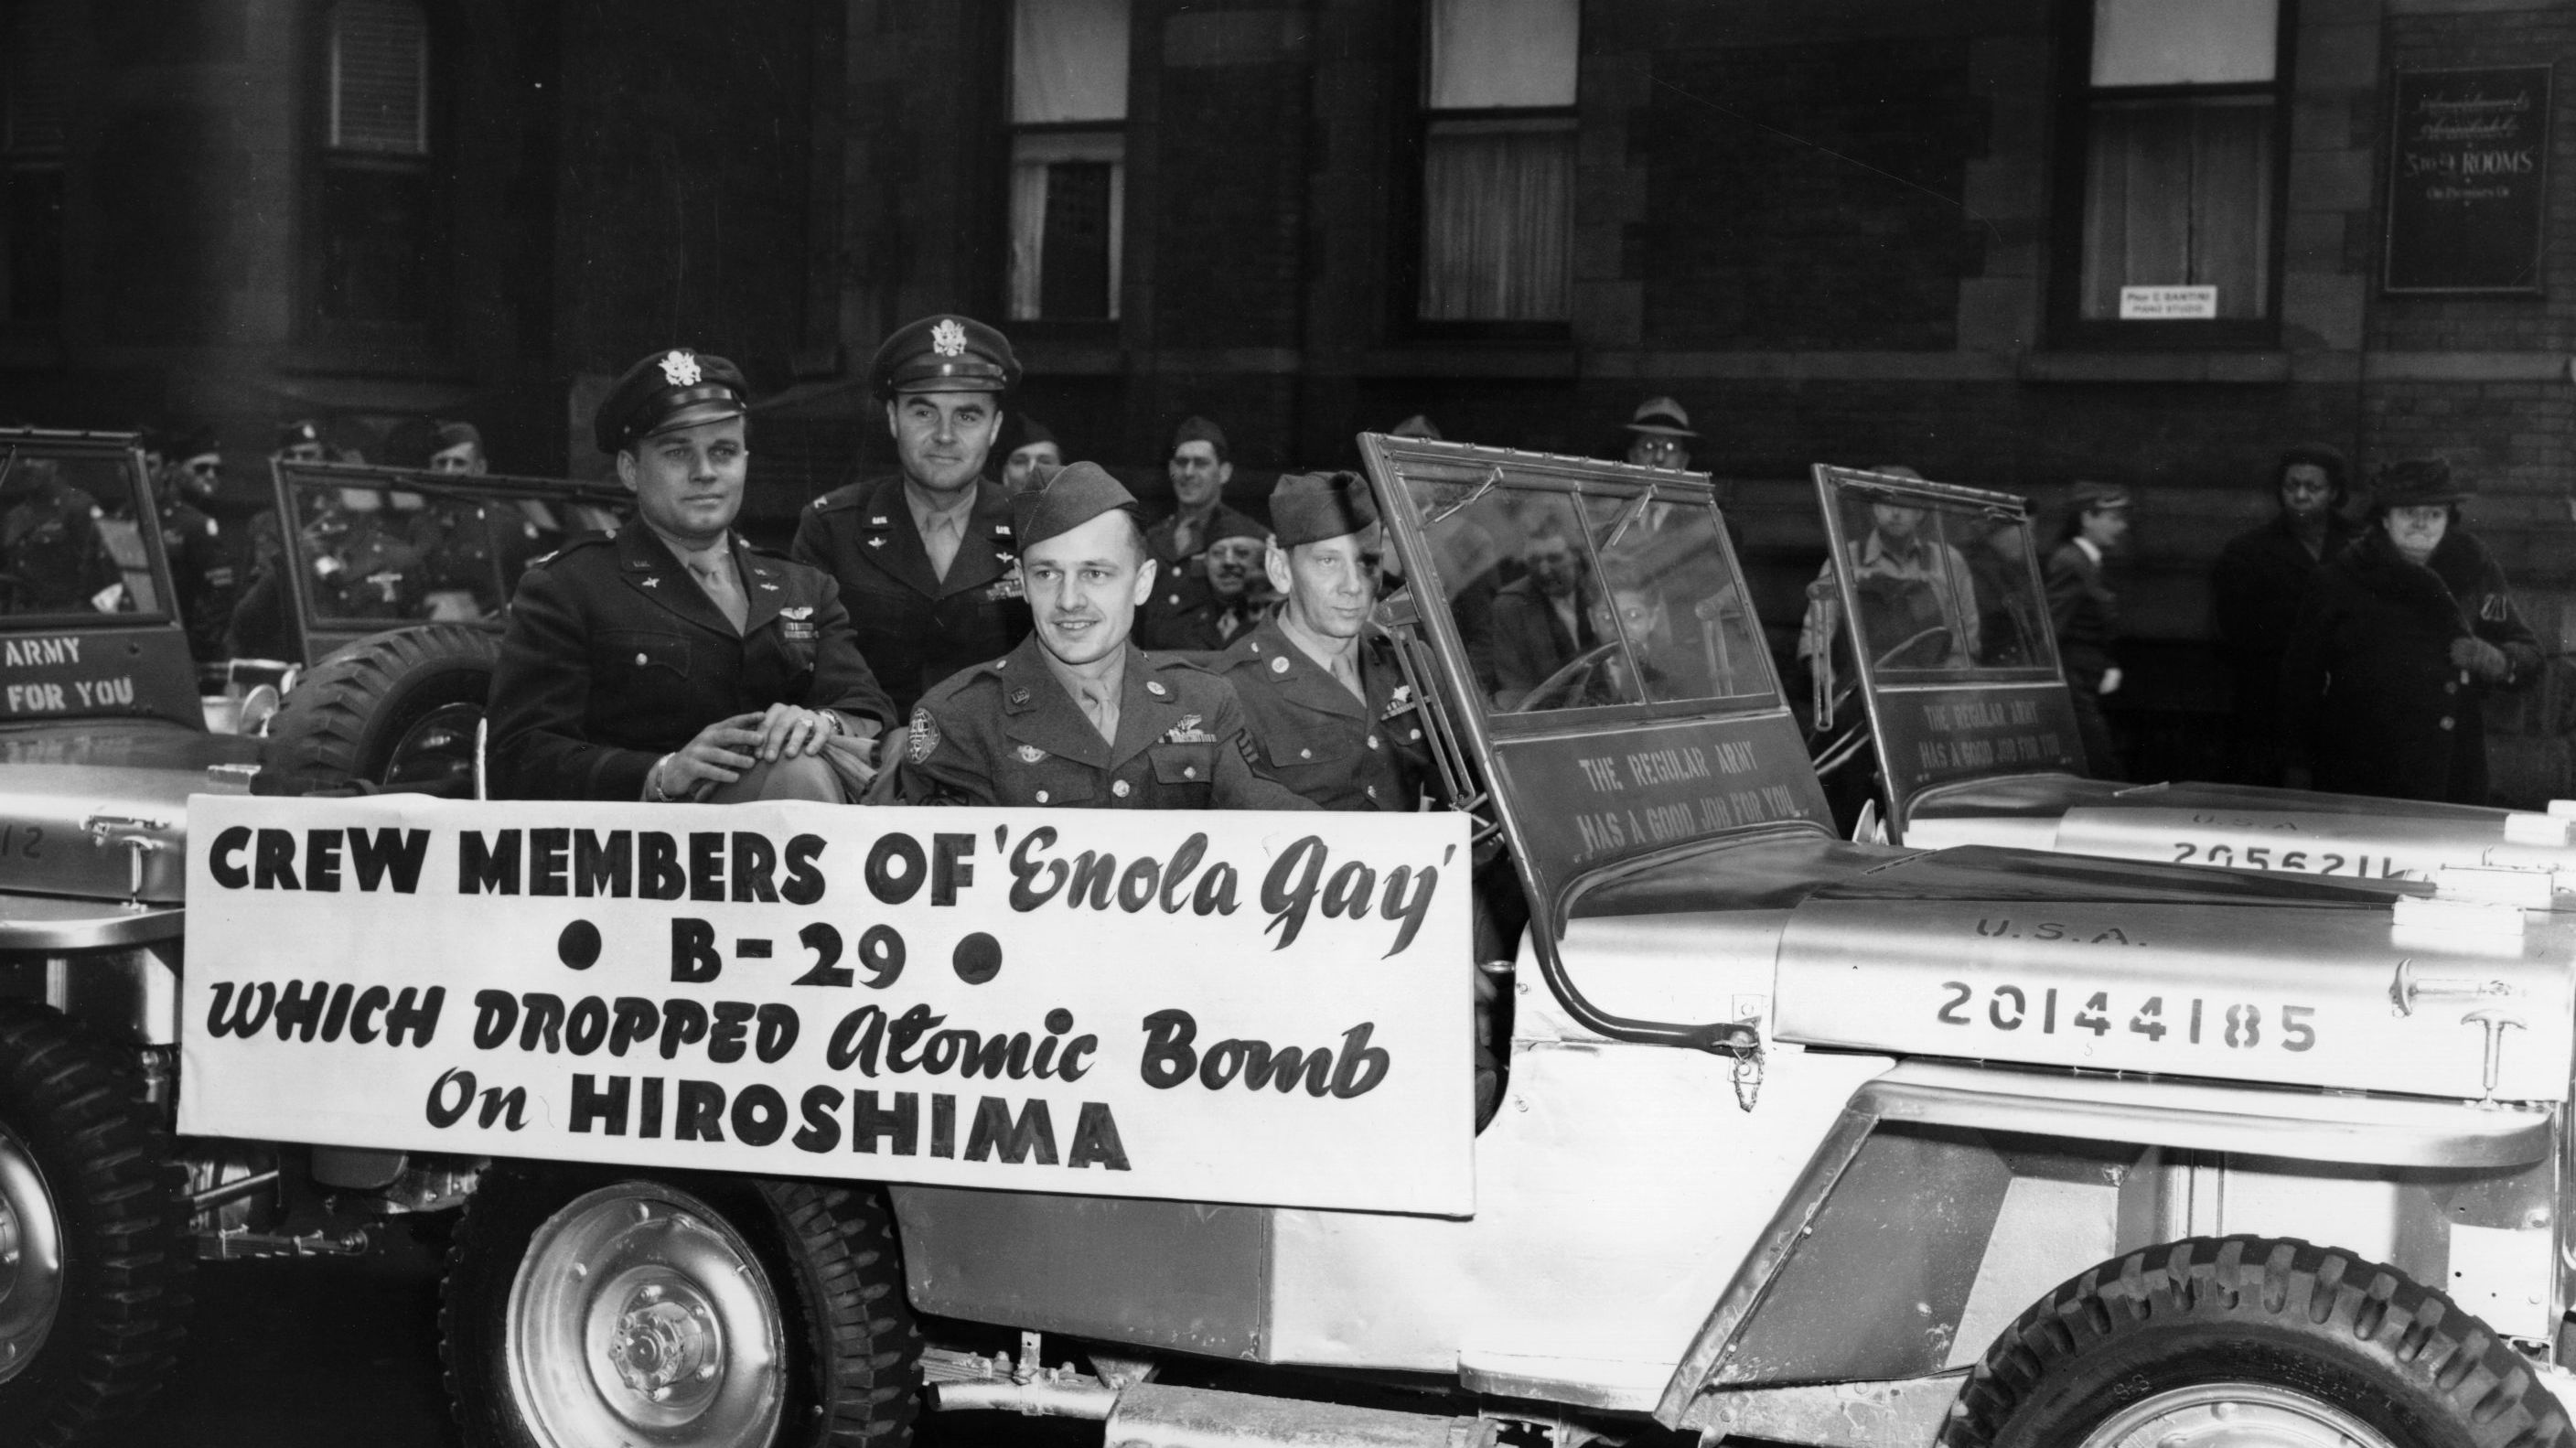 enola gay atomic bomb images